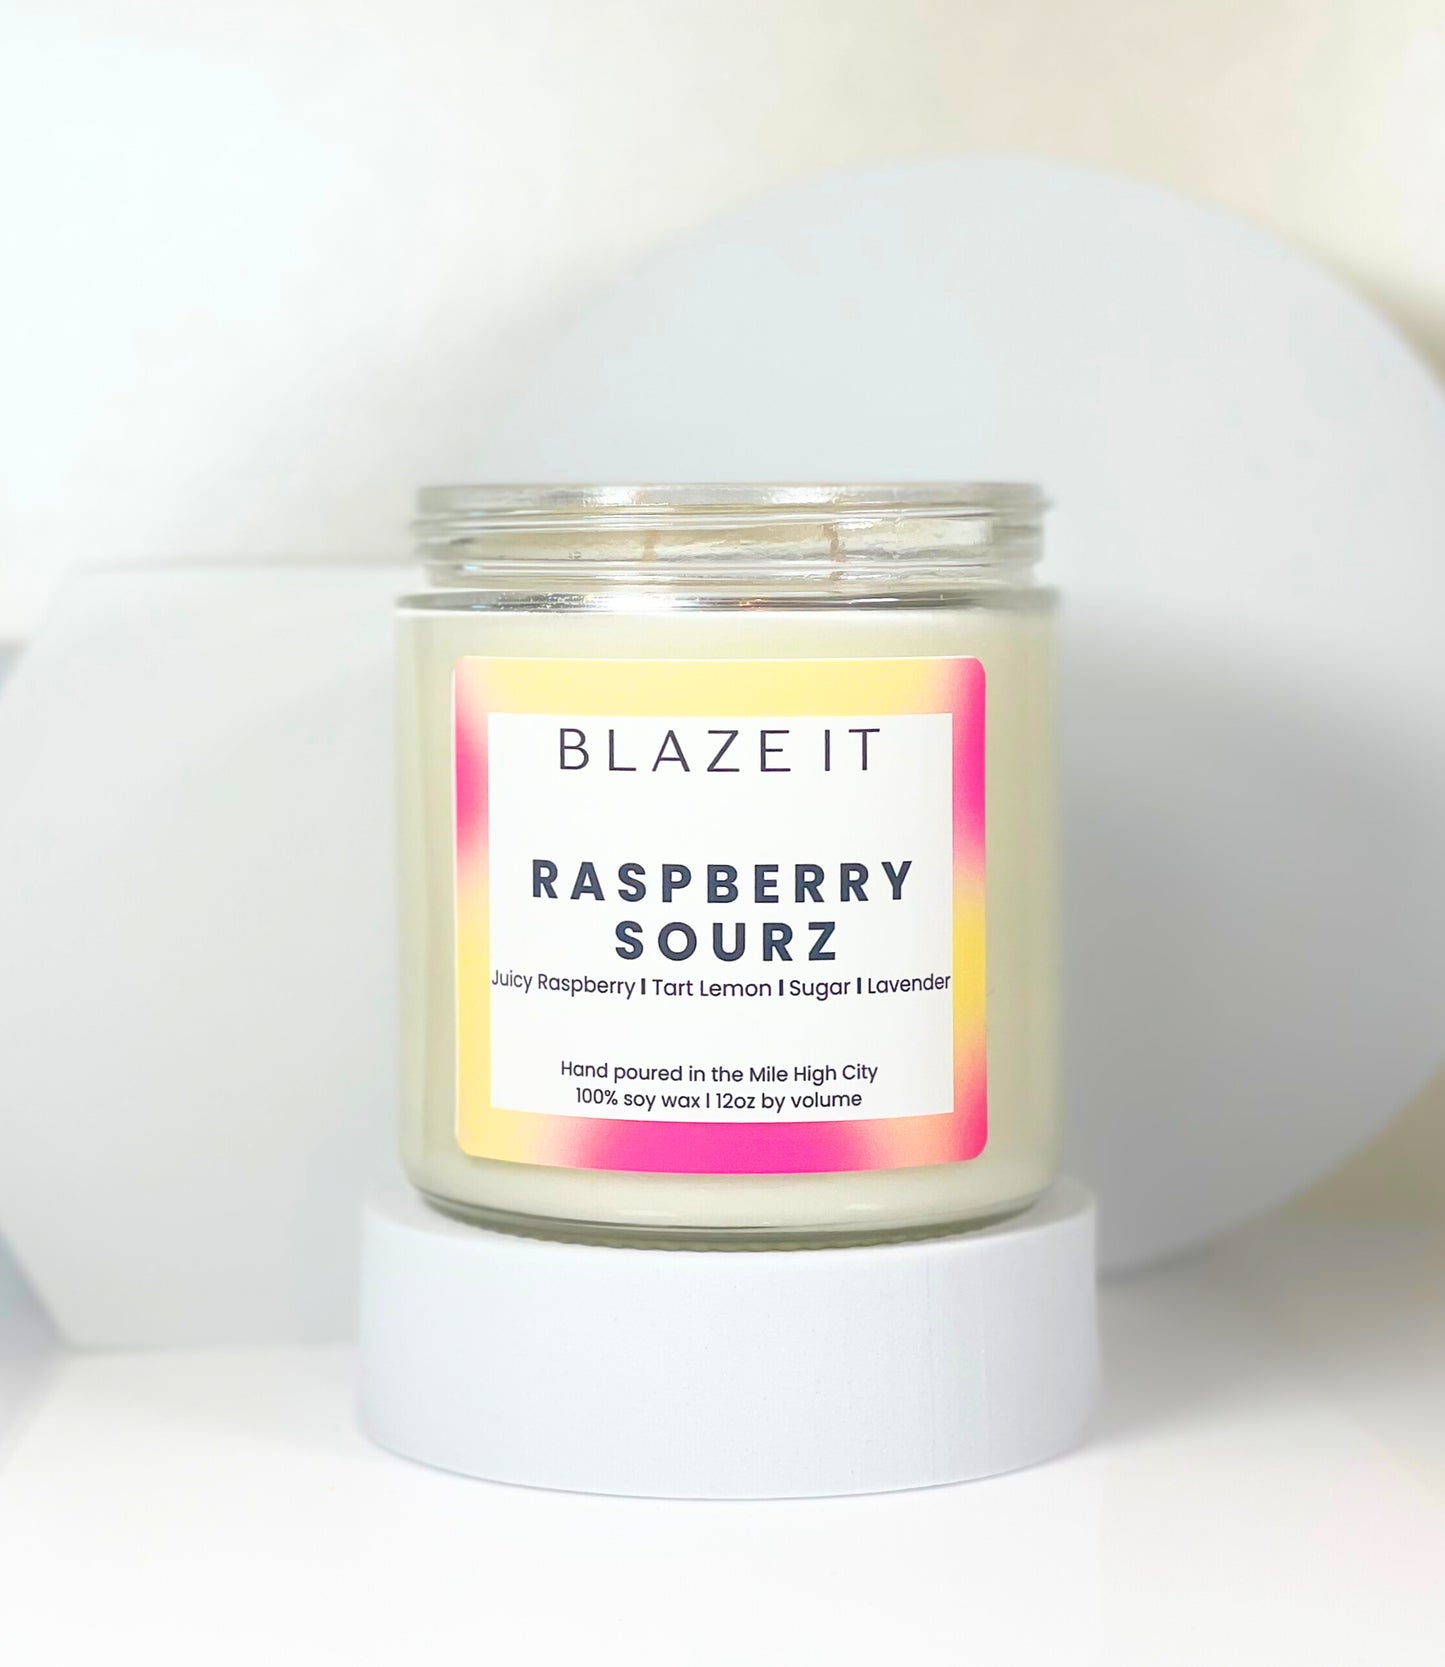 Raspberry Sourz candle - Blaze It Candle Co